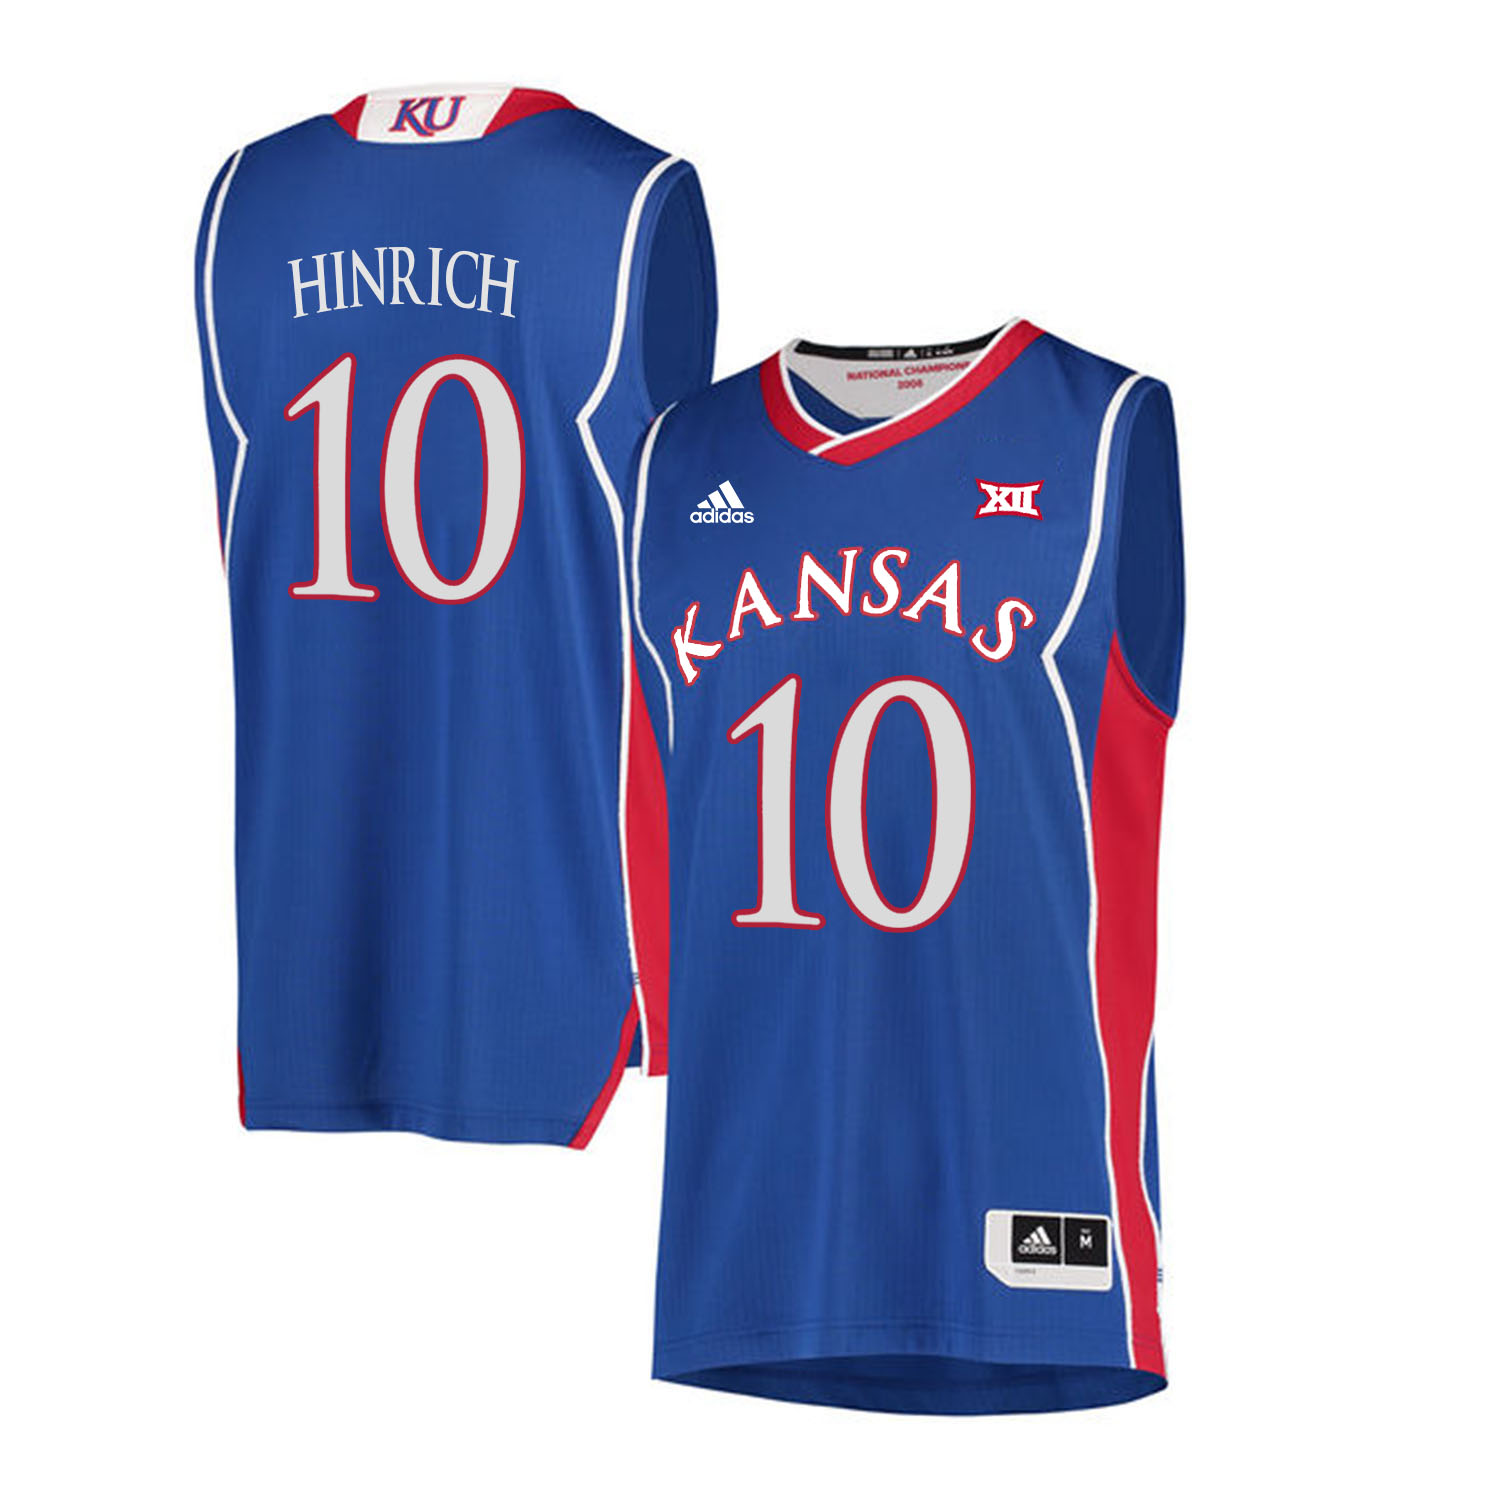 Kansas Jayhawks 10 Kirk Hinrich Blue Throwback College Basketball Jersey